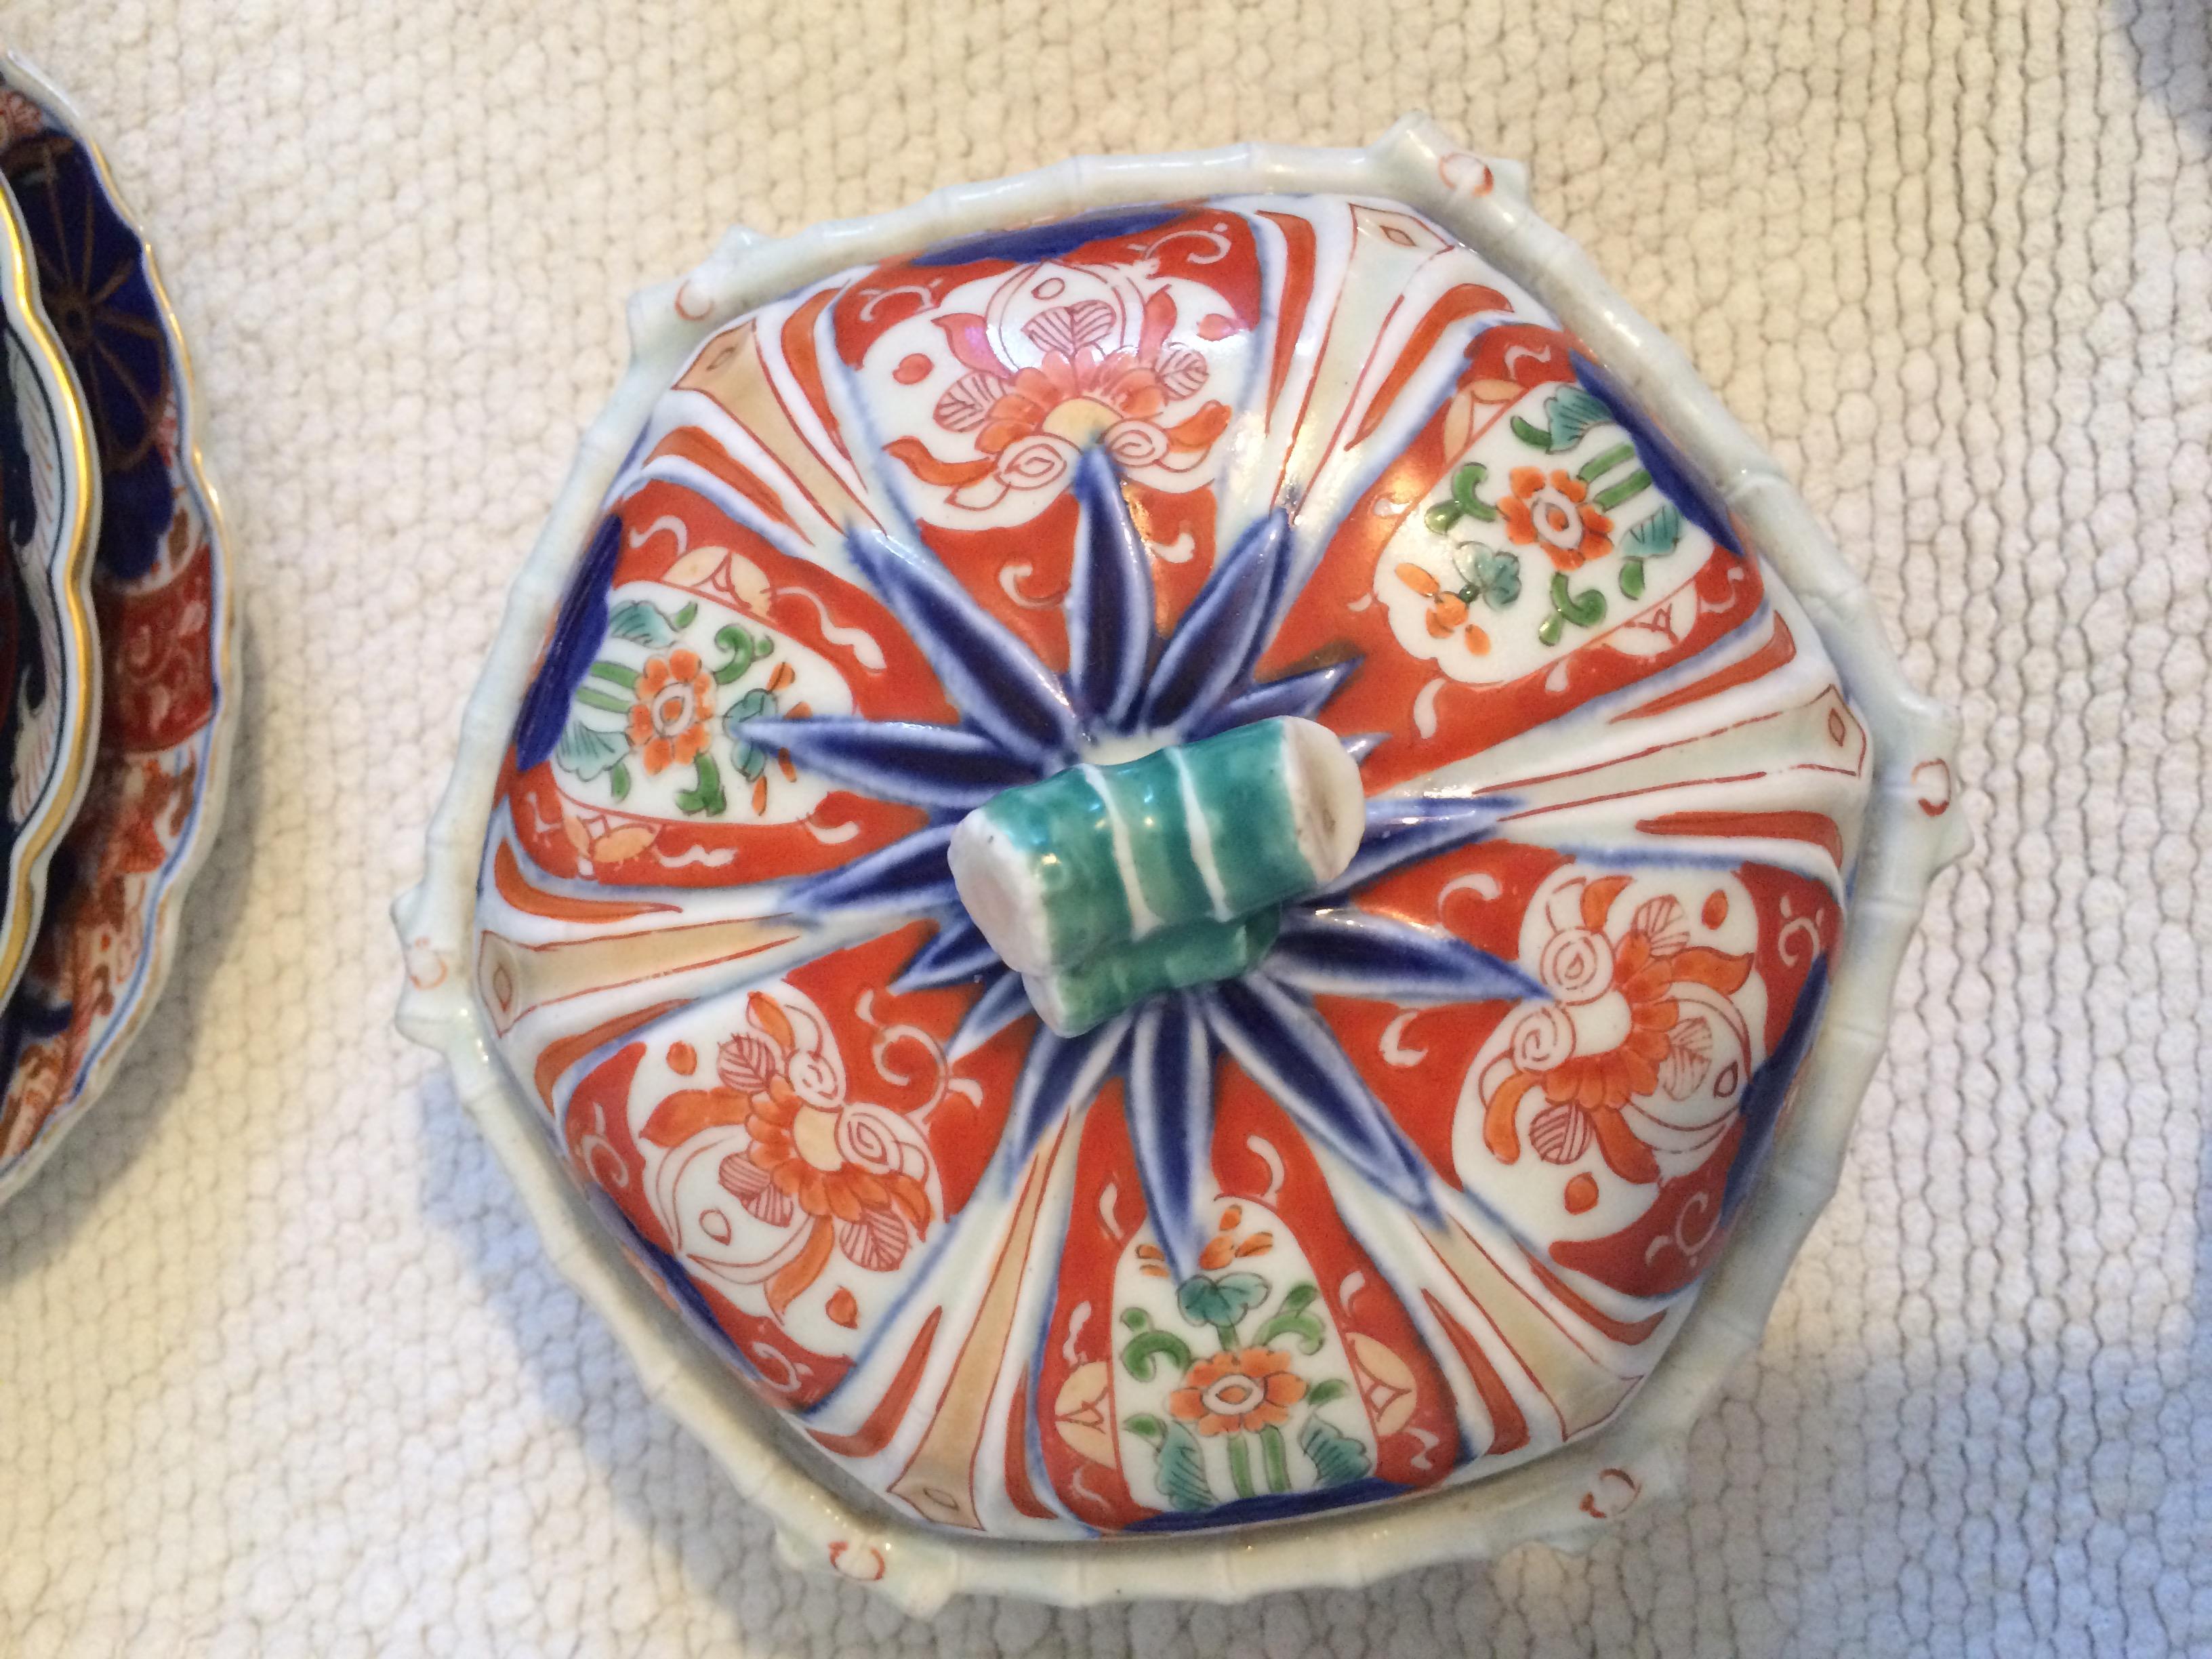 19th Century Antique Japanese Meiji Period Decorative Porcelain Trinket or Jewelry Box